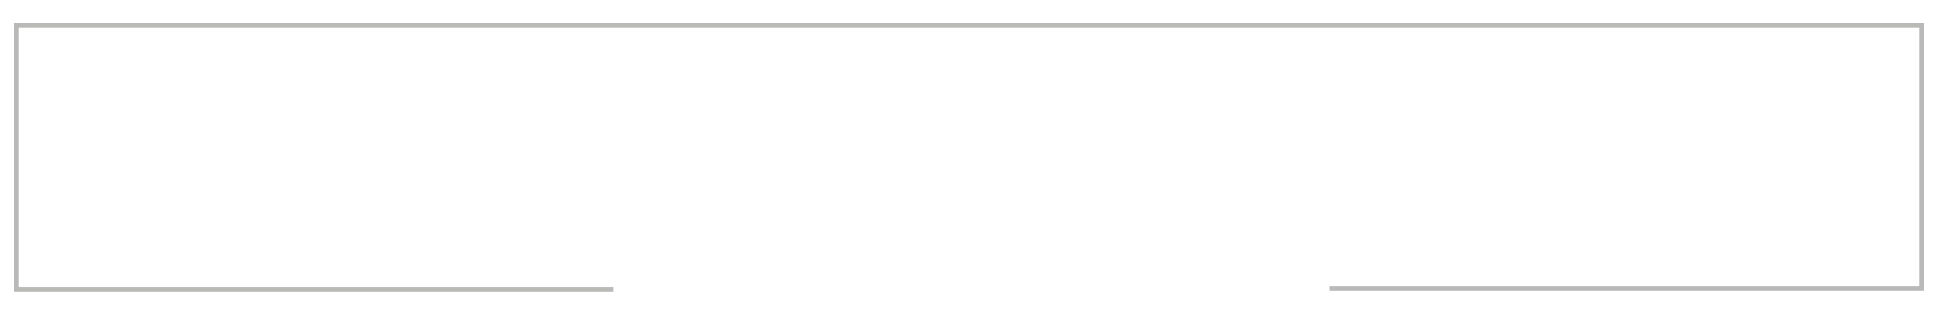 Benford Financial Solutions logo